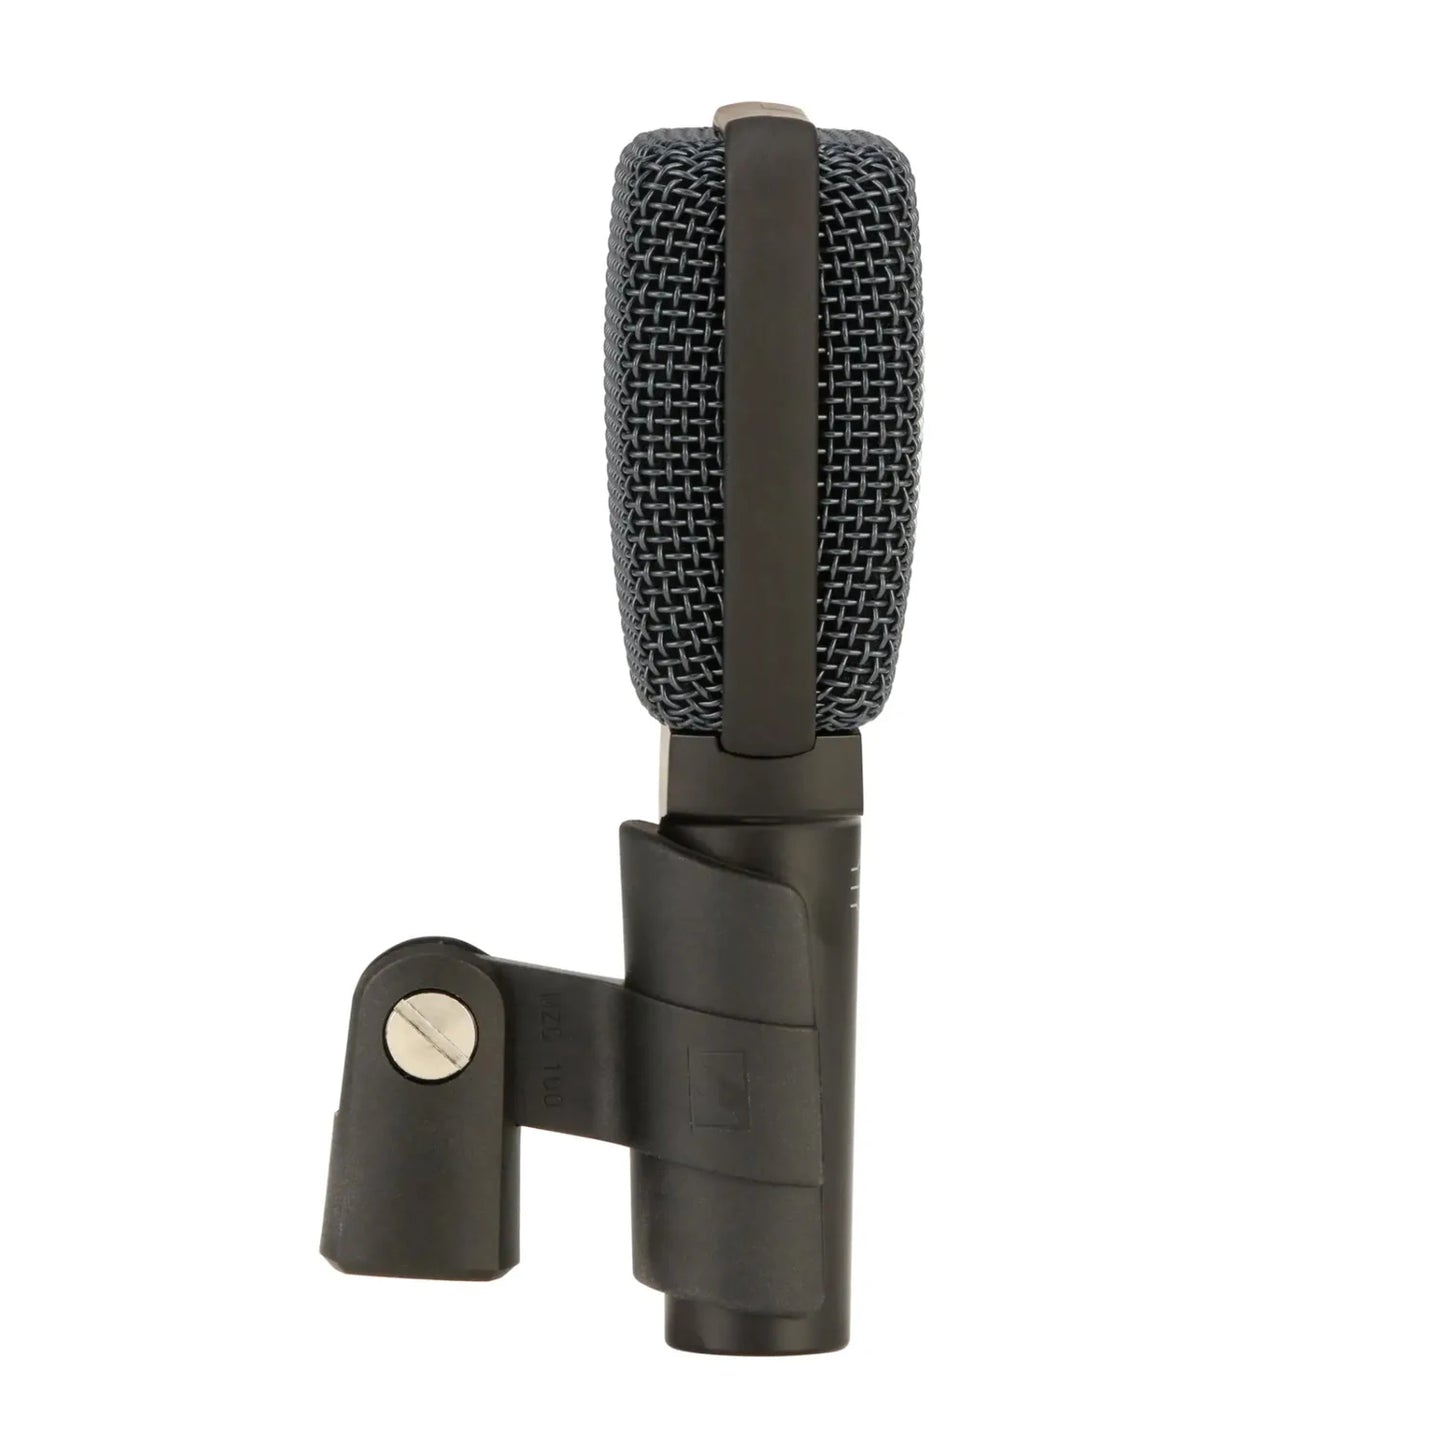 Sennheiser E906 - Supercardioid Dynamic Microphone